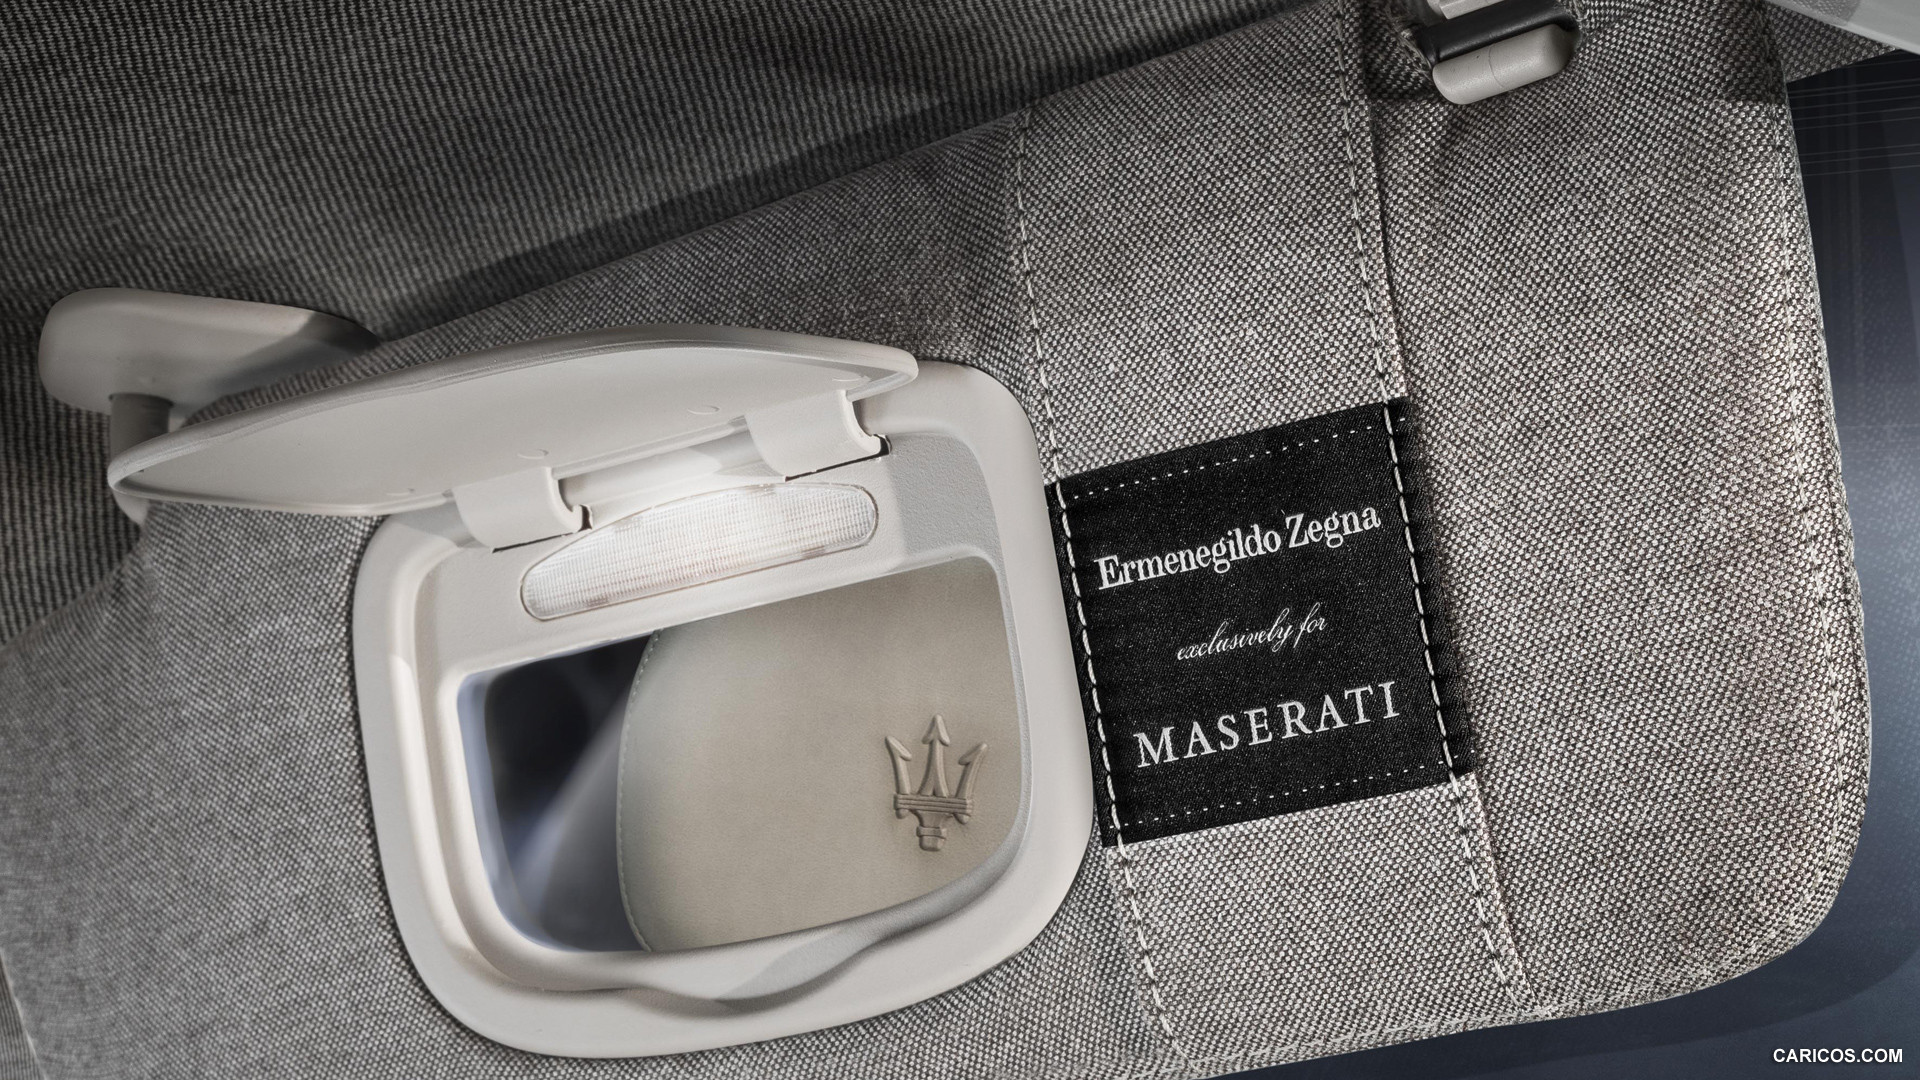 Maserati Quattroporte Ermenegildo Zegna Limited Edition (2013)  - Interior Detail, #4 of 4